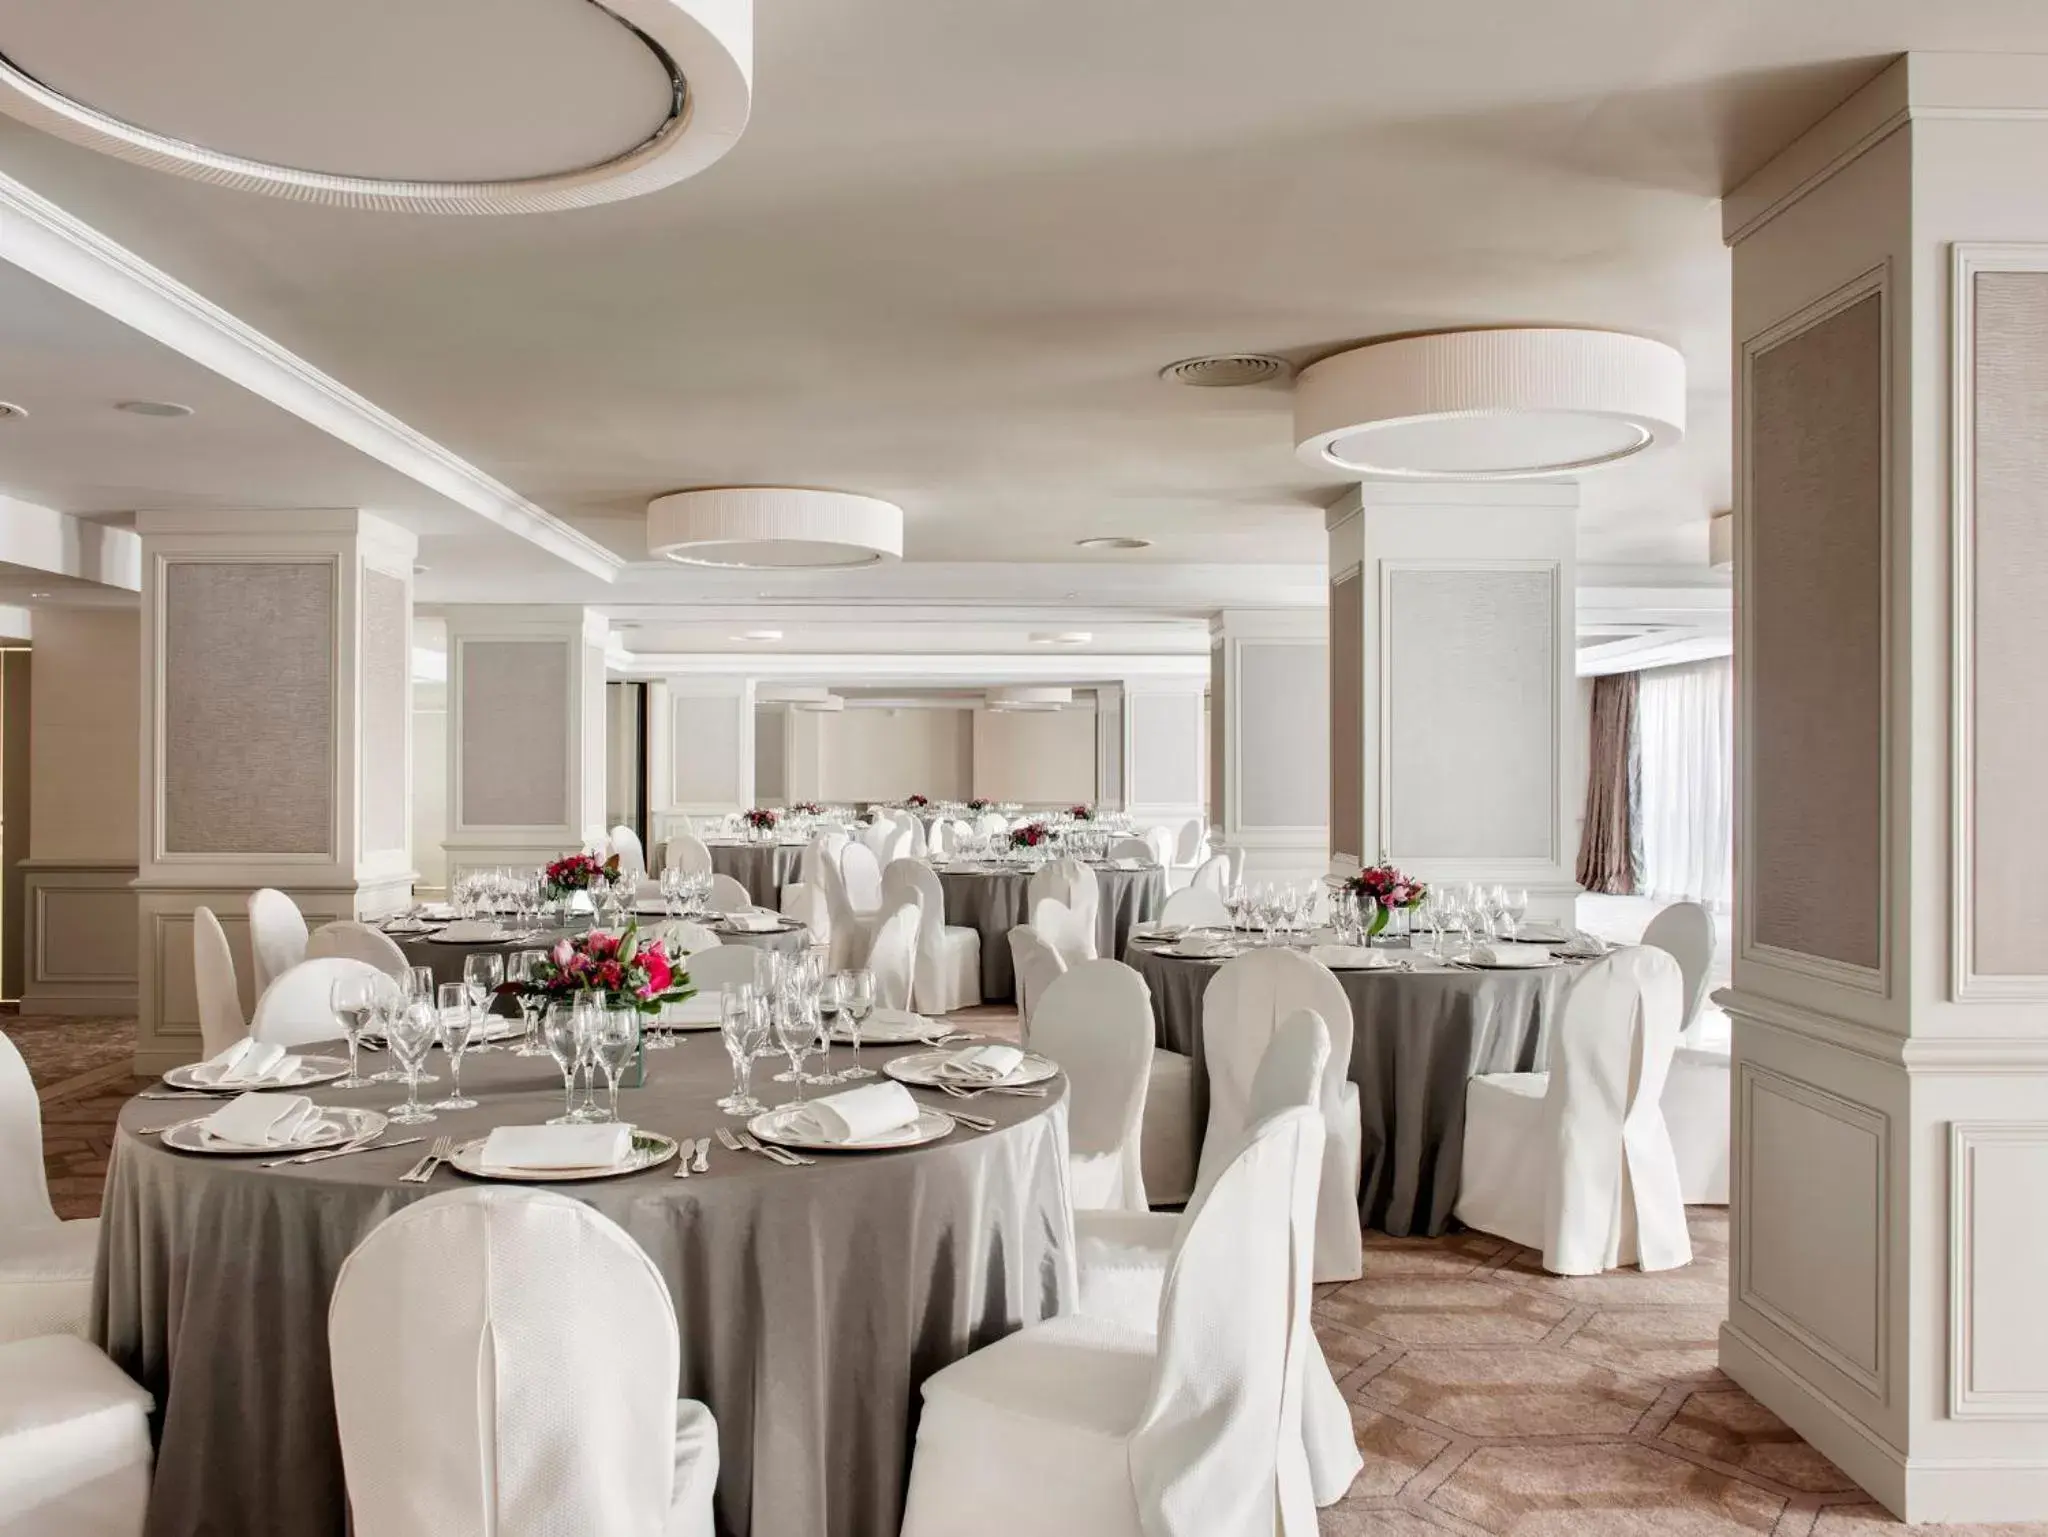 Banquet/Function facilities, Banquet Facilities in InterContinental Madrid, an IHG Hotel